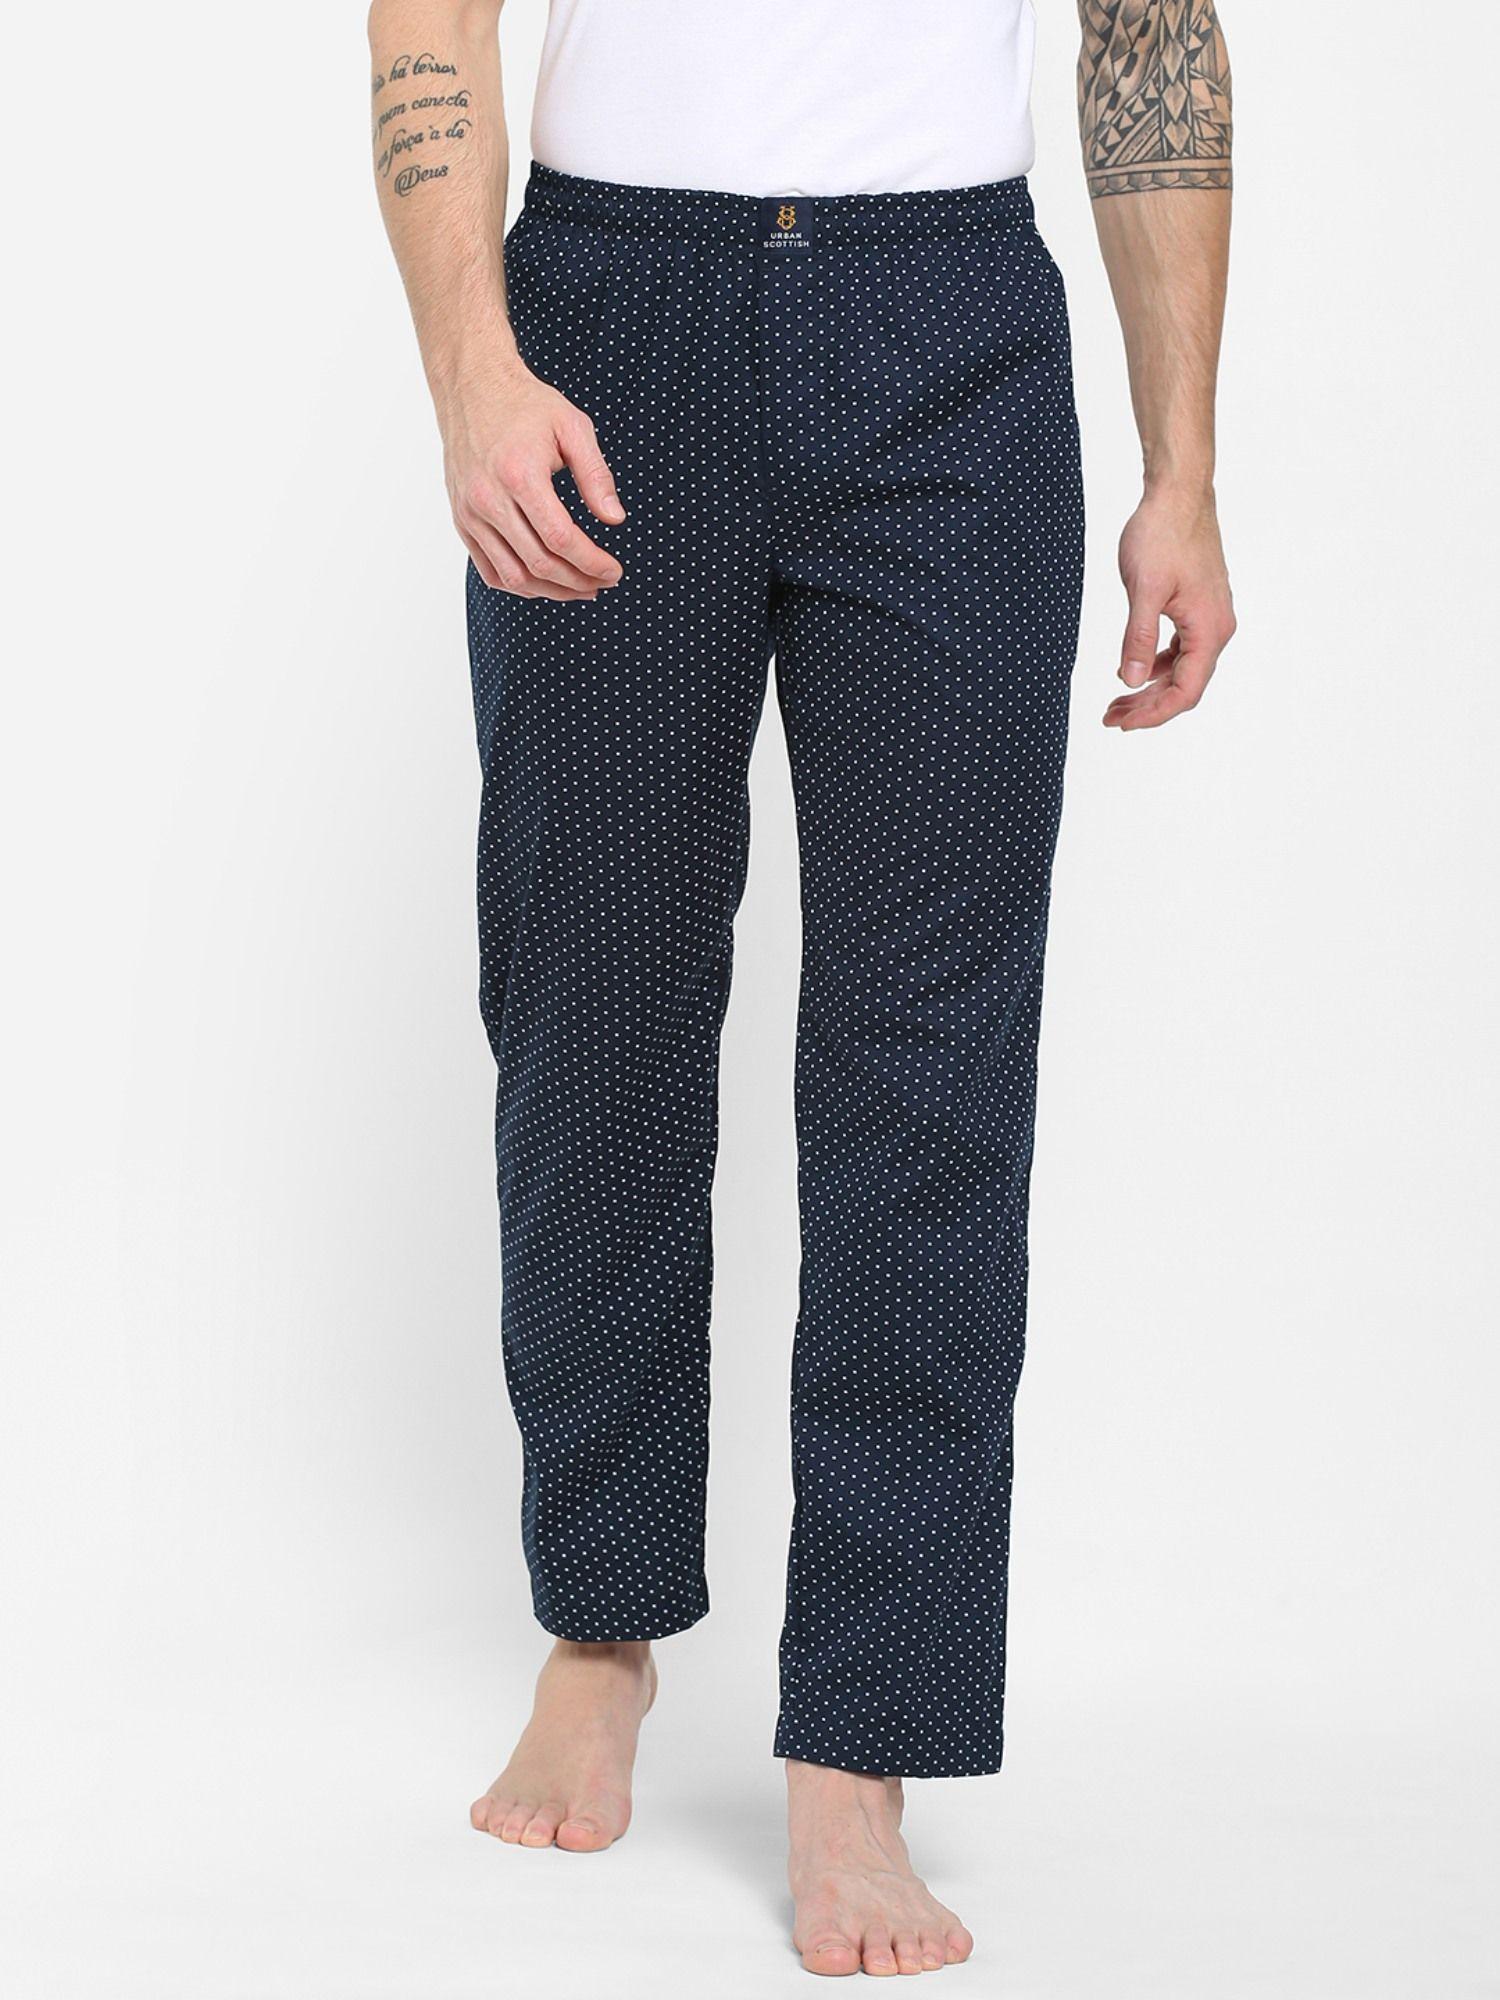 mens navy blue cotton printed lounge pants